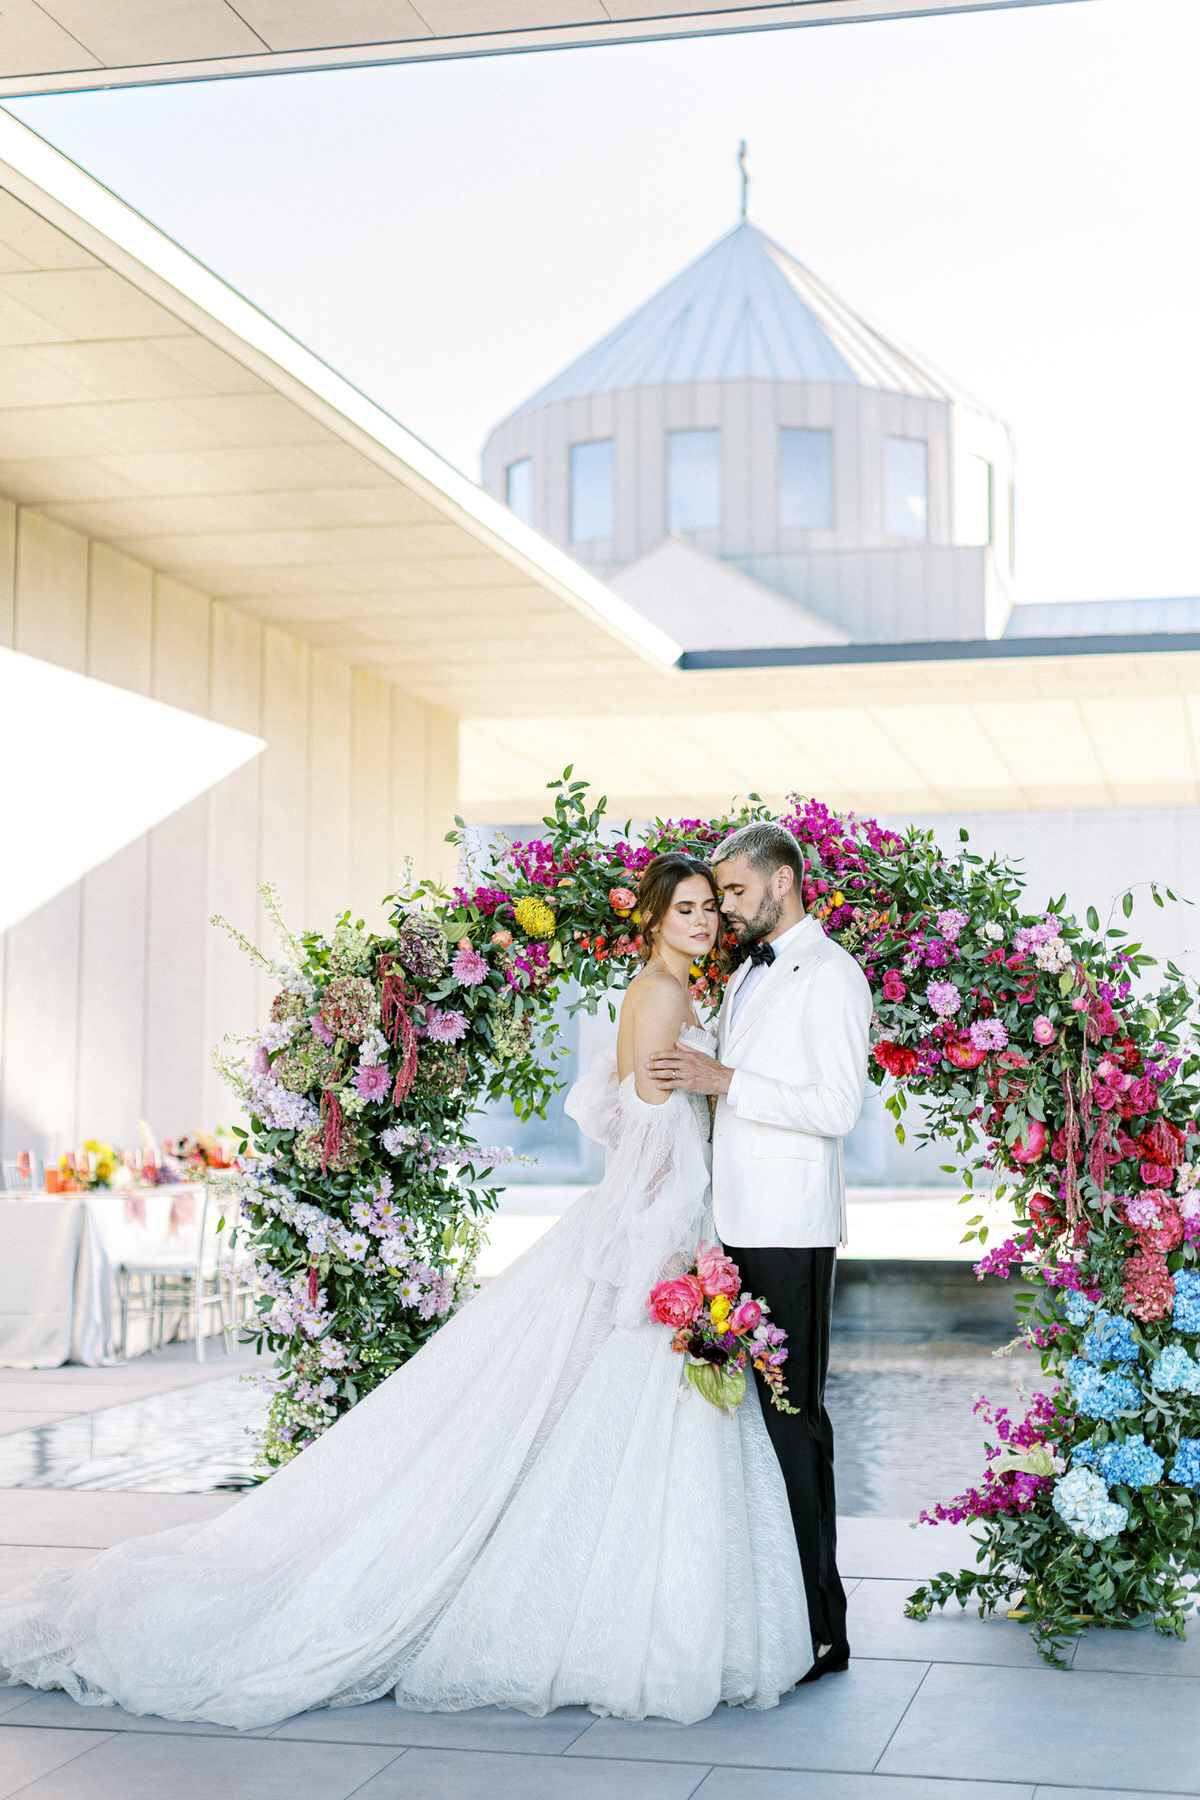 Sleek Outdoor Space Sets This Contemporary Wedding Venue Apart